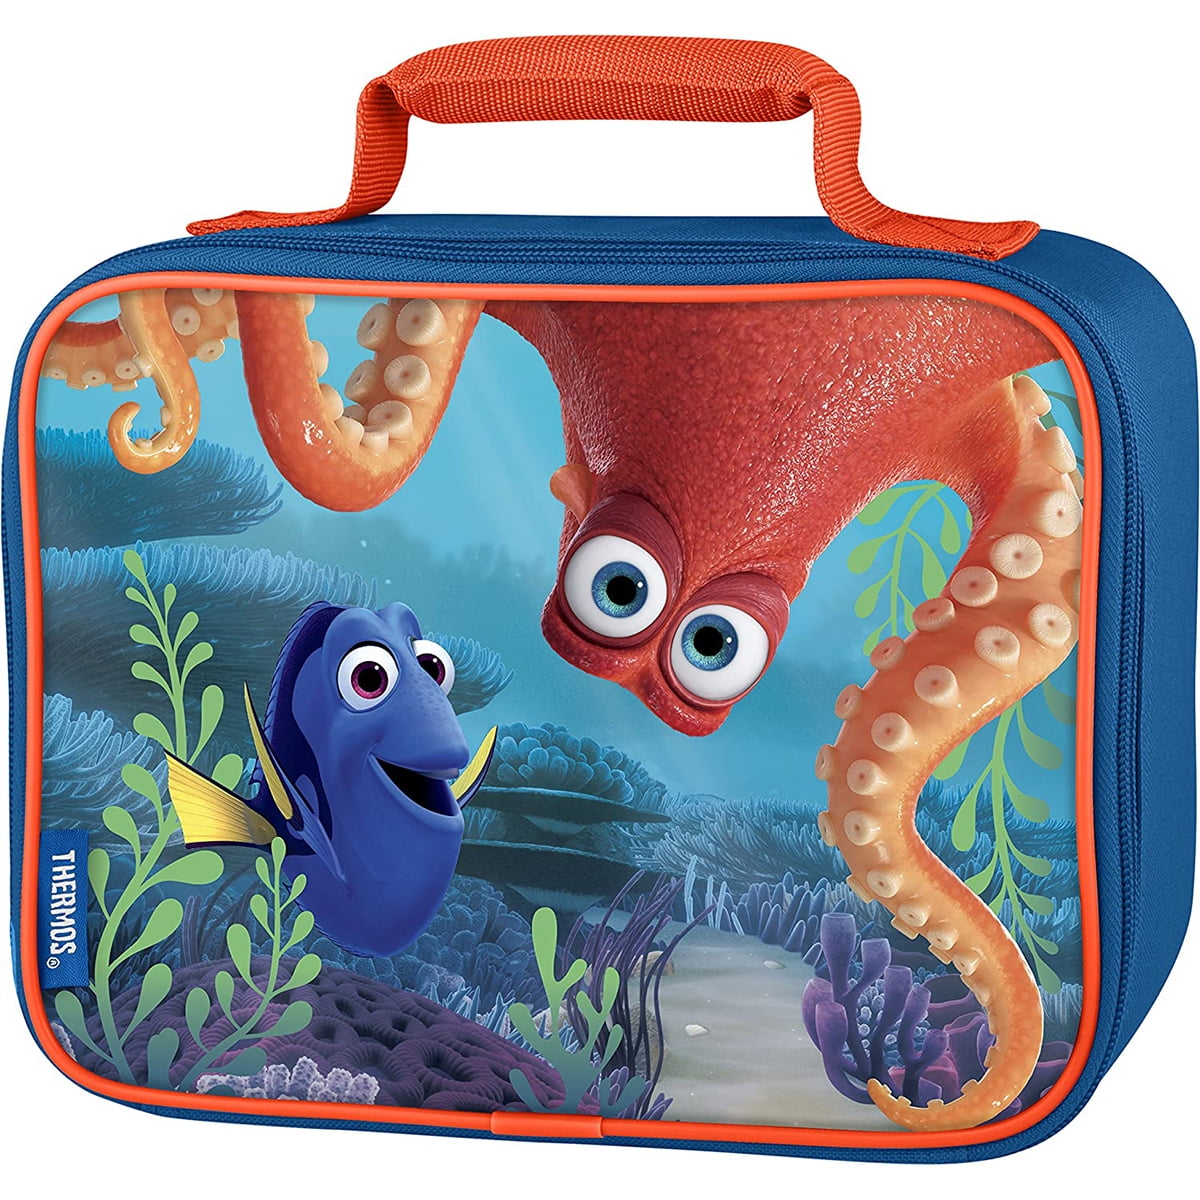 Disney Finding Nemo Dori Thermos Hard Blue Lunch Box Made in USA 